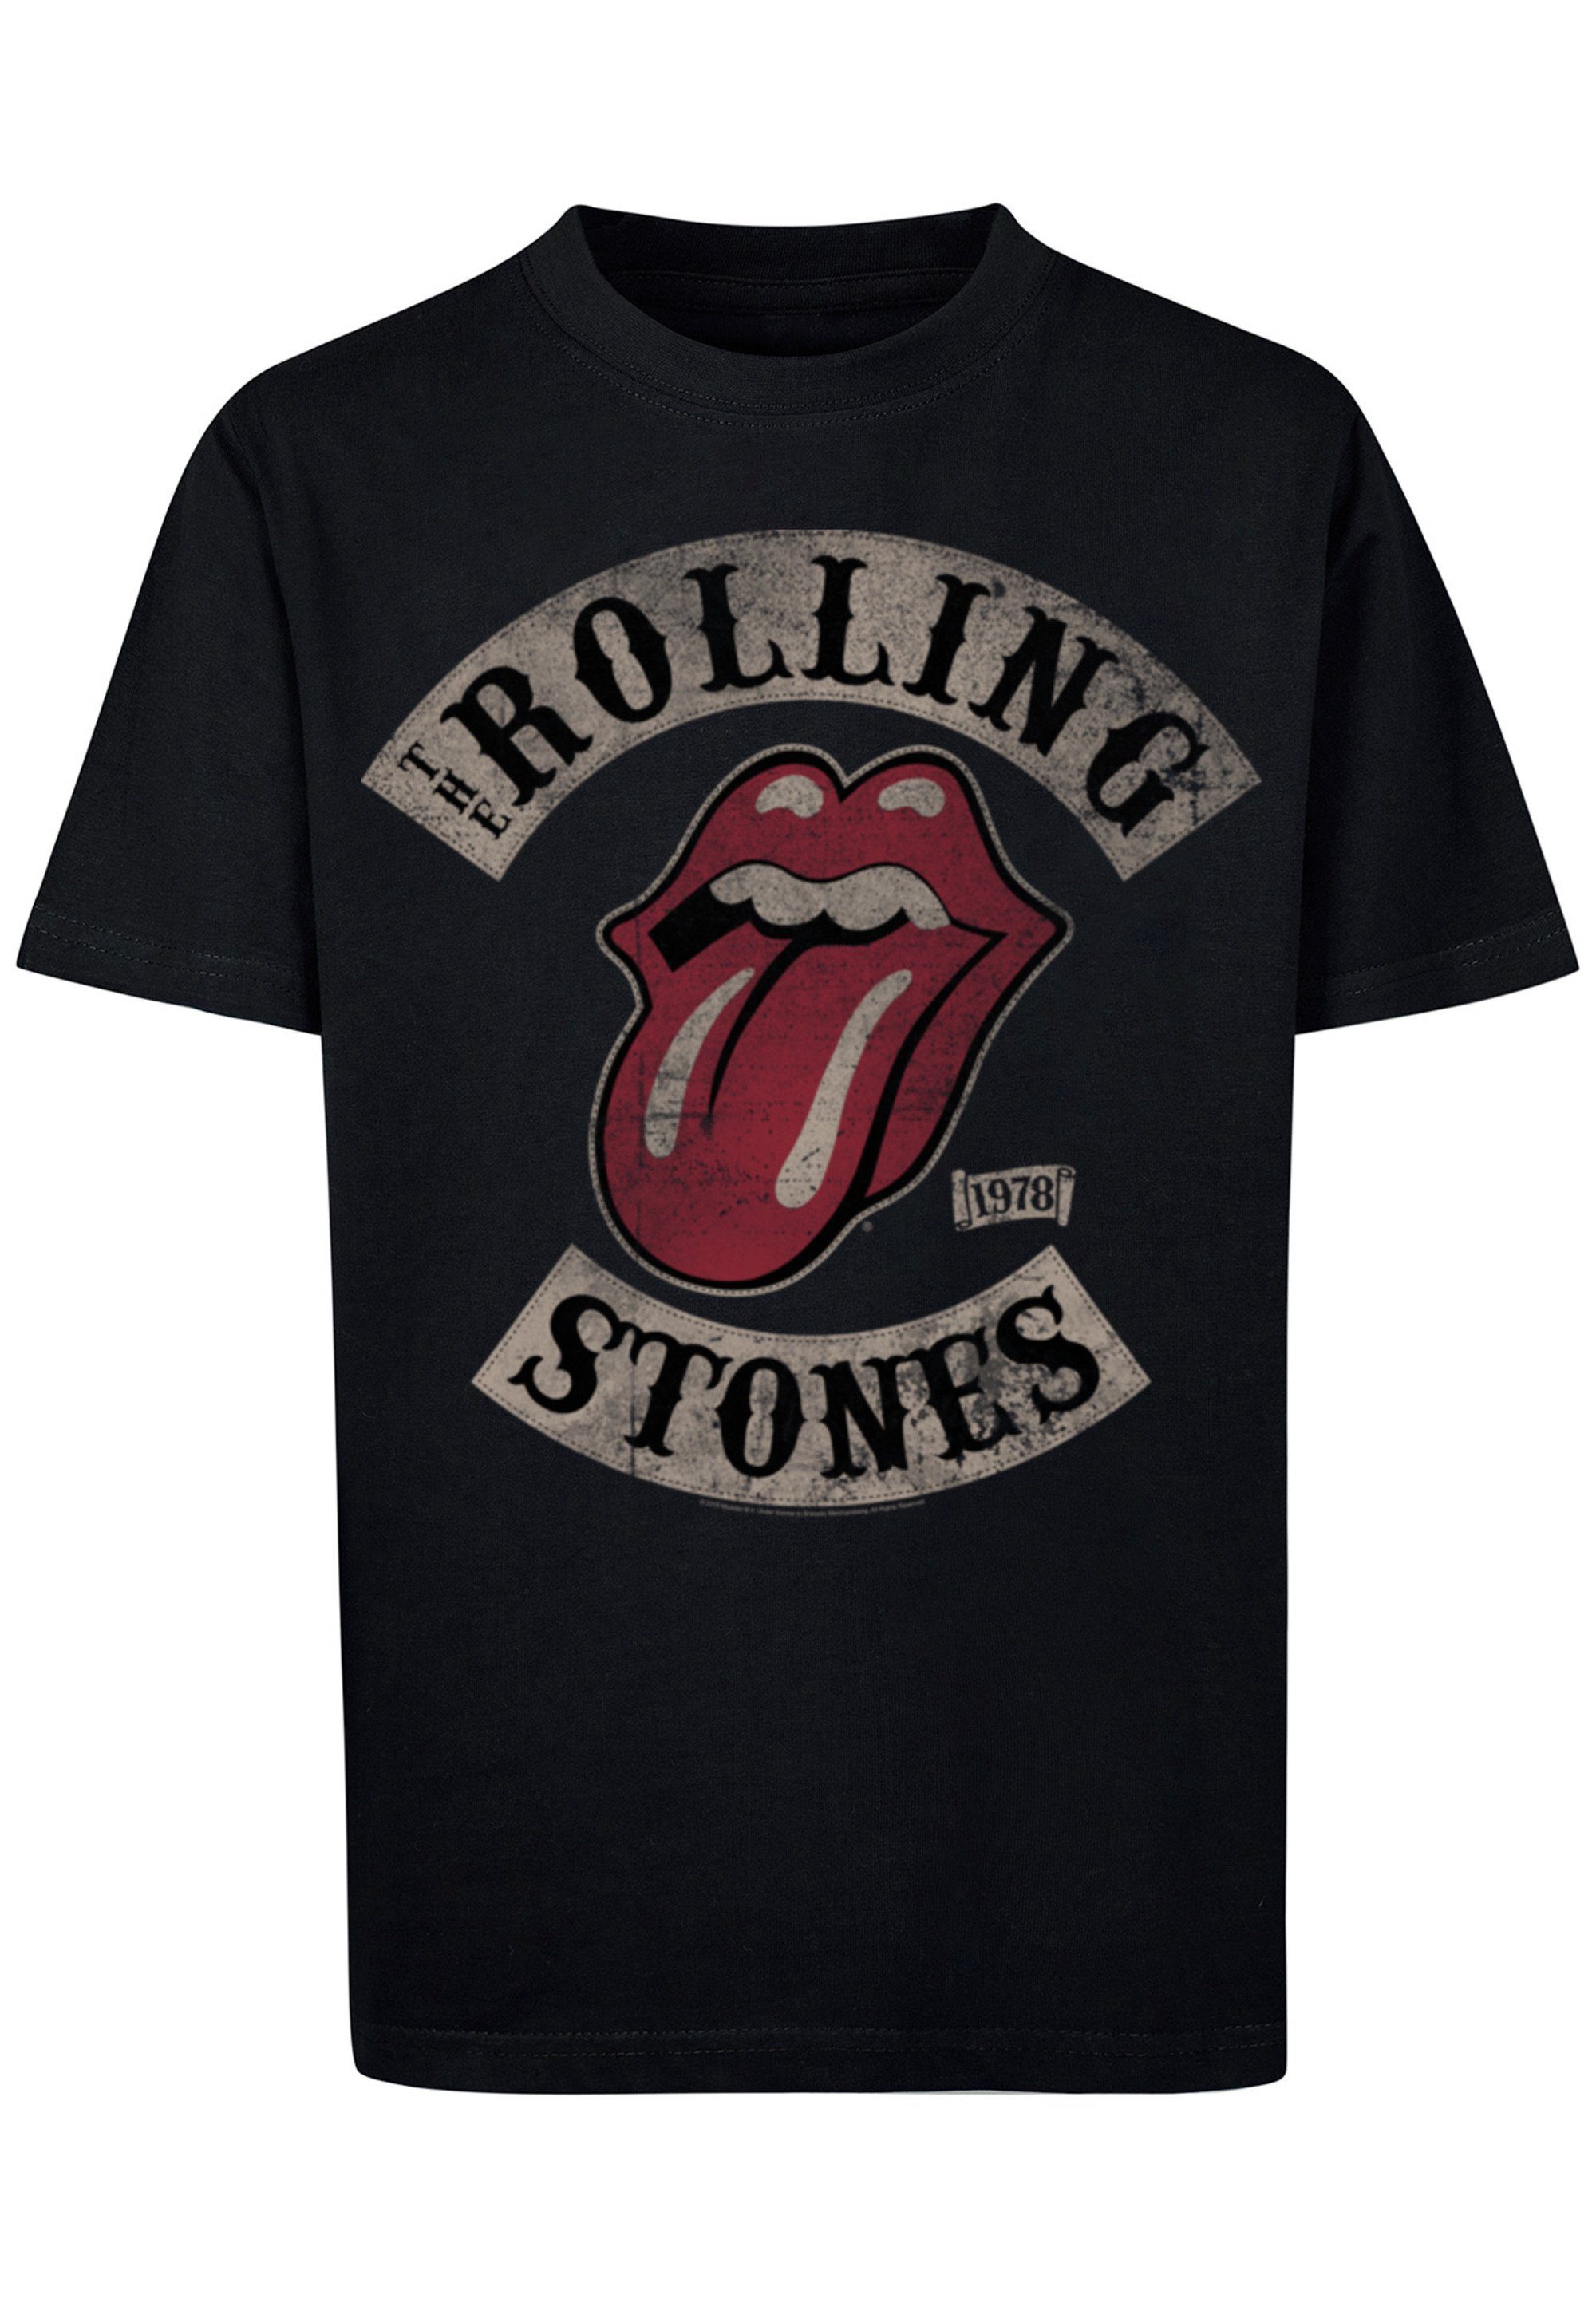 F4NT4STIC T-Shirt Rockband Print schwarz '78 Black The Tour Stones Rolling